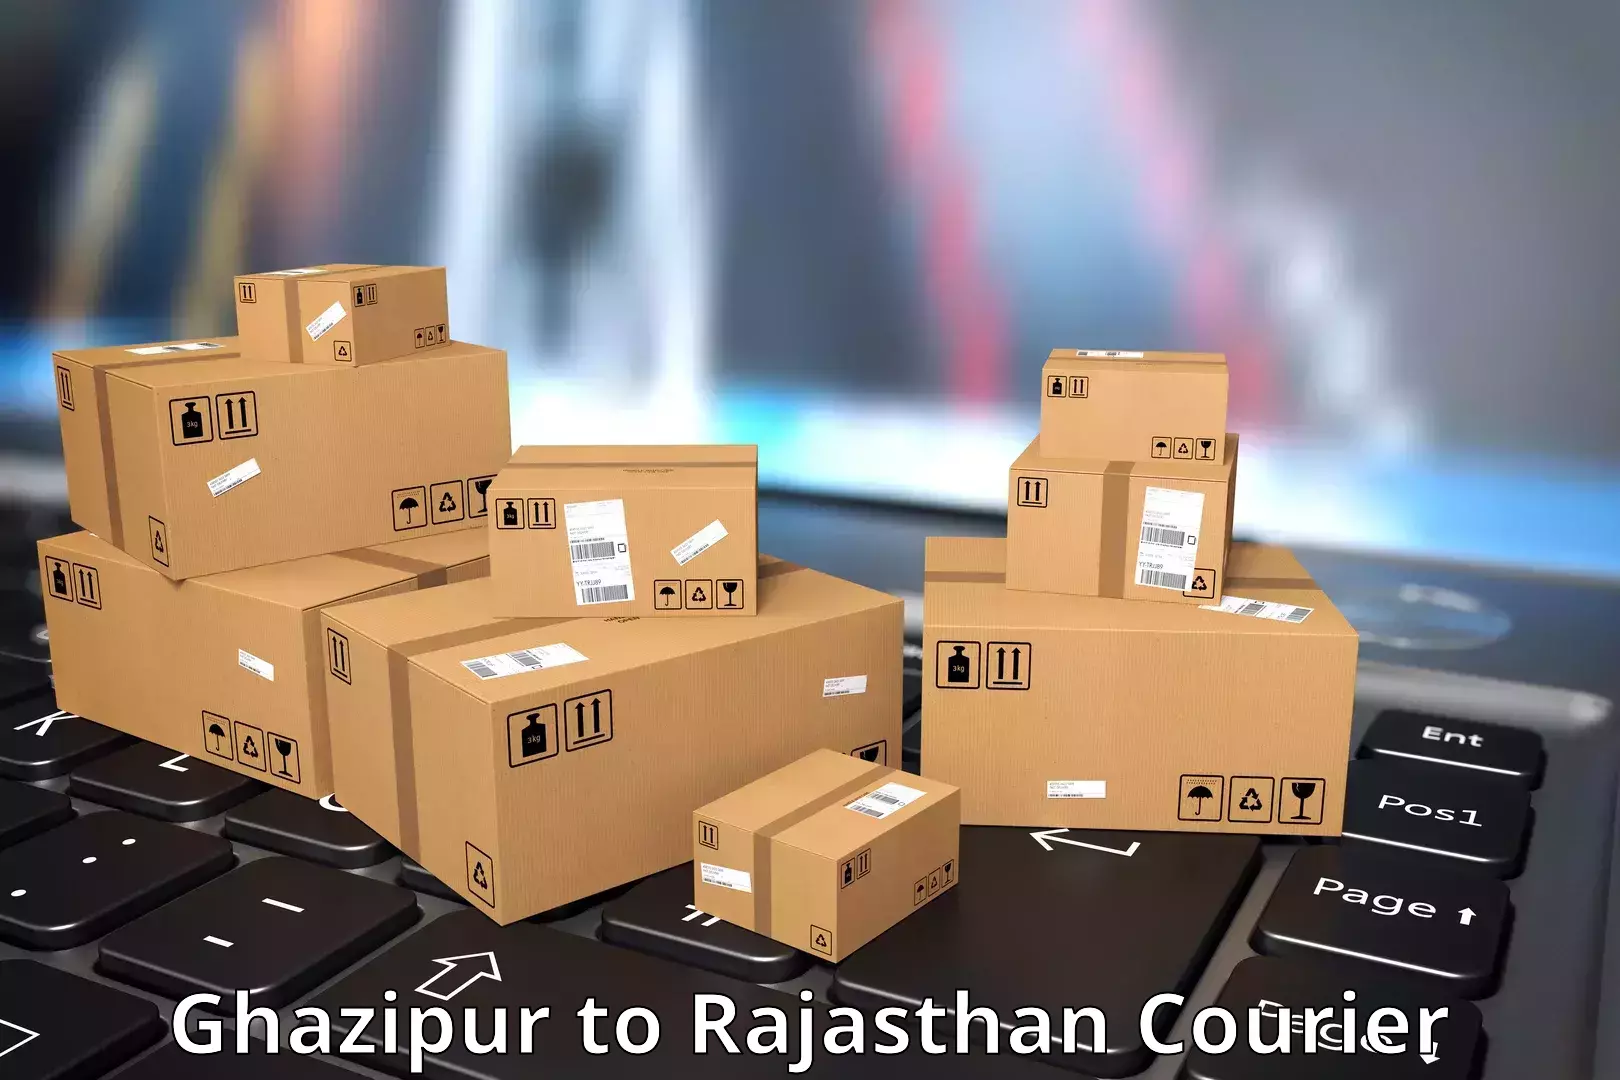 Global logistics network Ghazipur to Pratapgarh Rajasthan